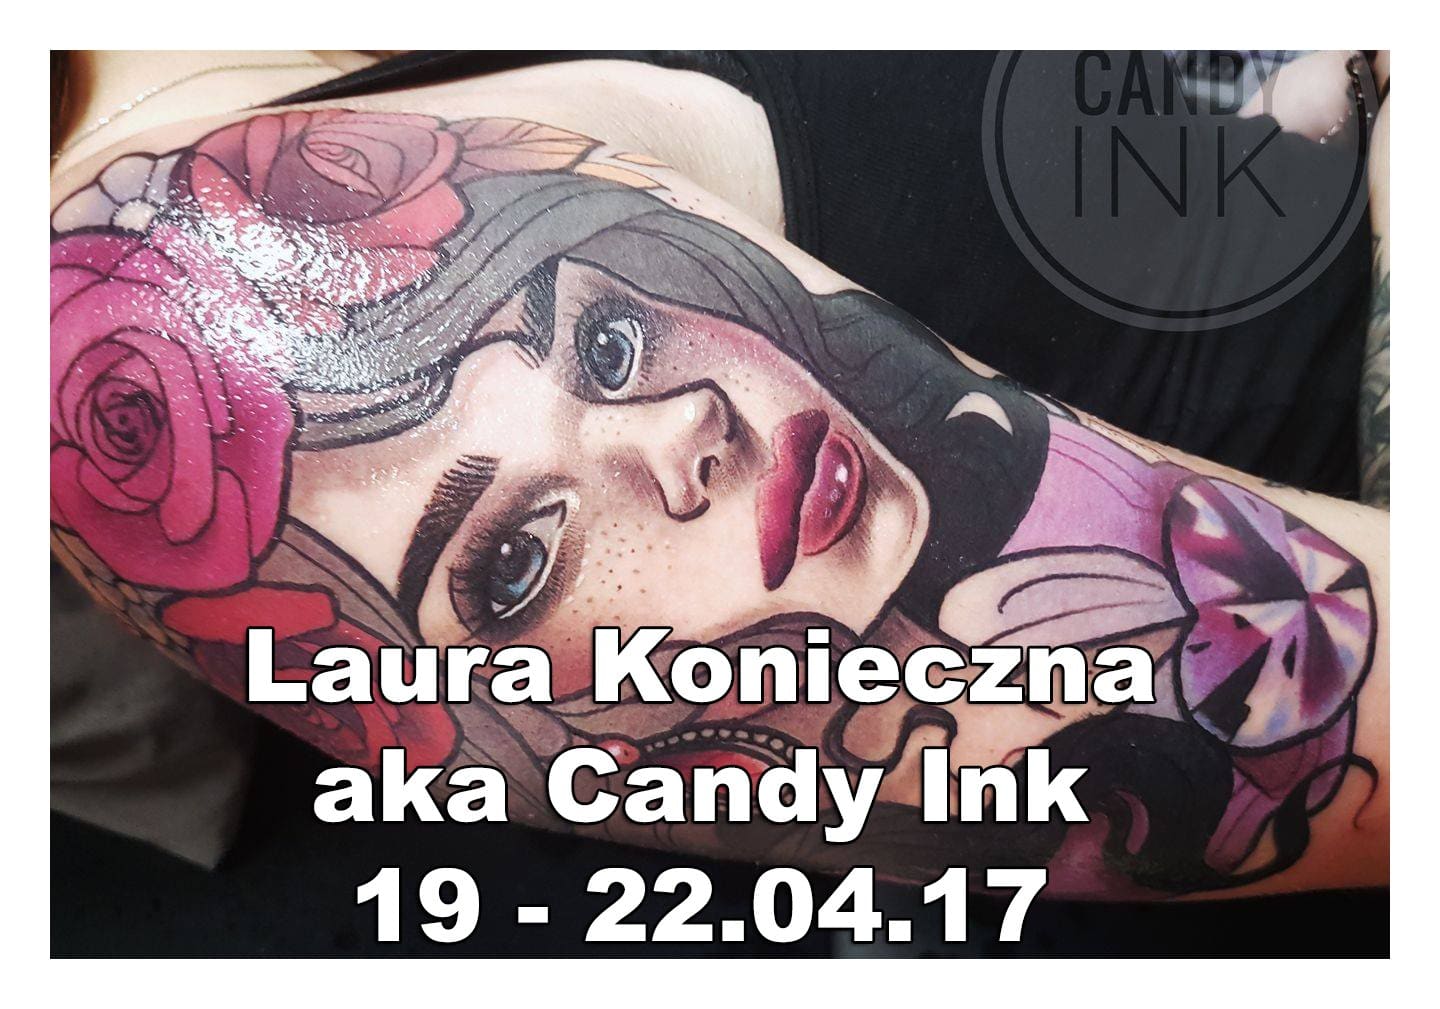 Laura Konieczna aka Candy Ink pt. II